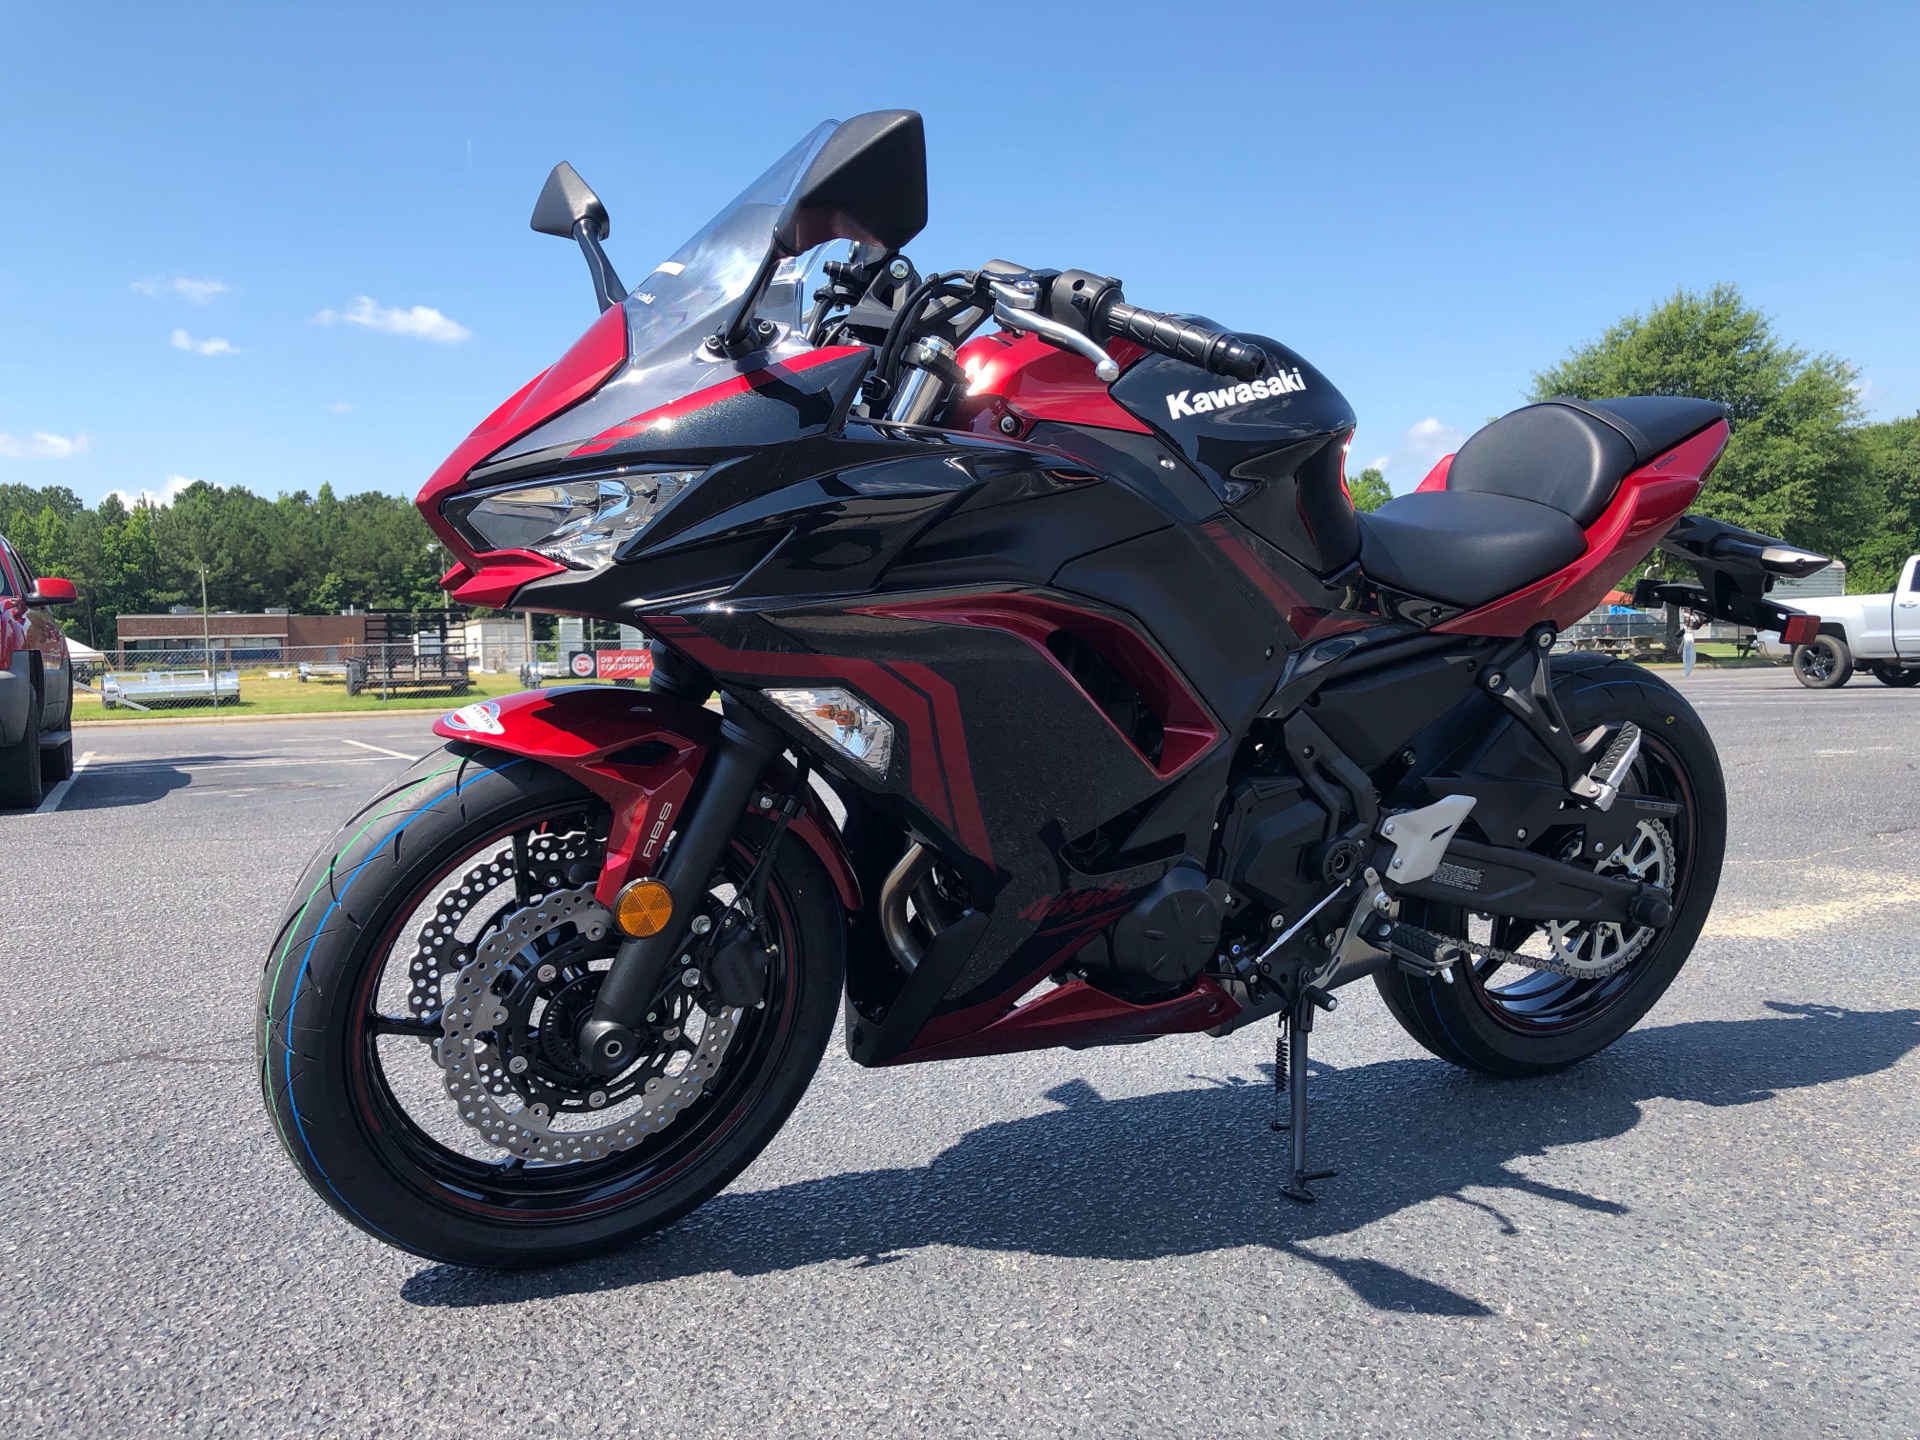 2021 Kawasaki Ninja 650 ABS in Greenville, North Carolina - Photo 5